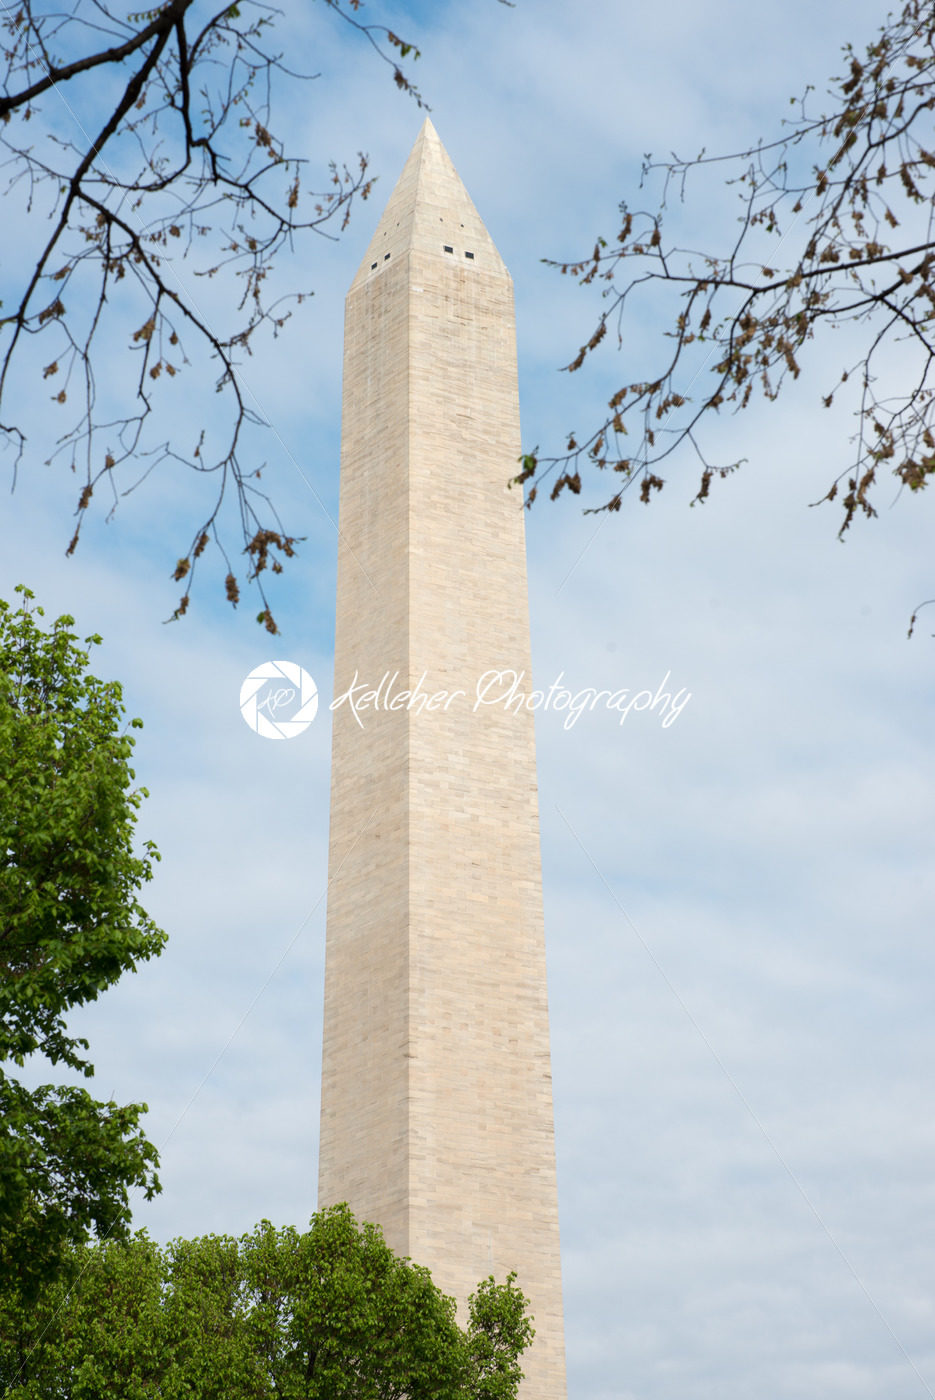 WASHINGTON, DISTRICT OF COLUMBIA – APRIL 14: View of the Washington Monument on April 14, 2017 - Kelleher Photography Store